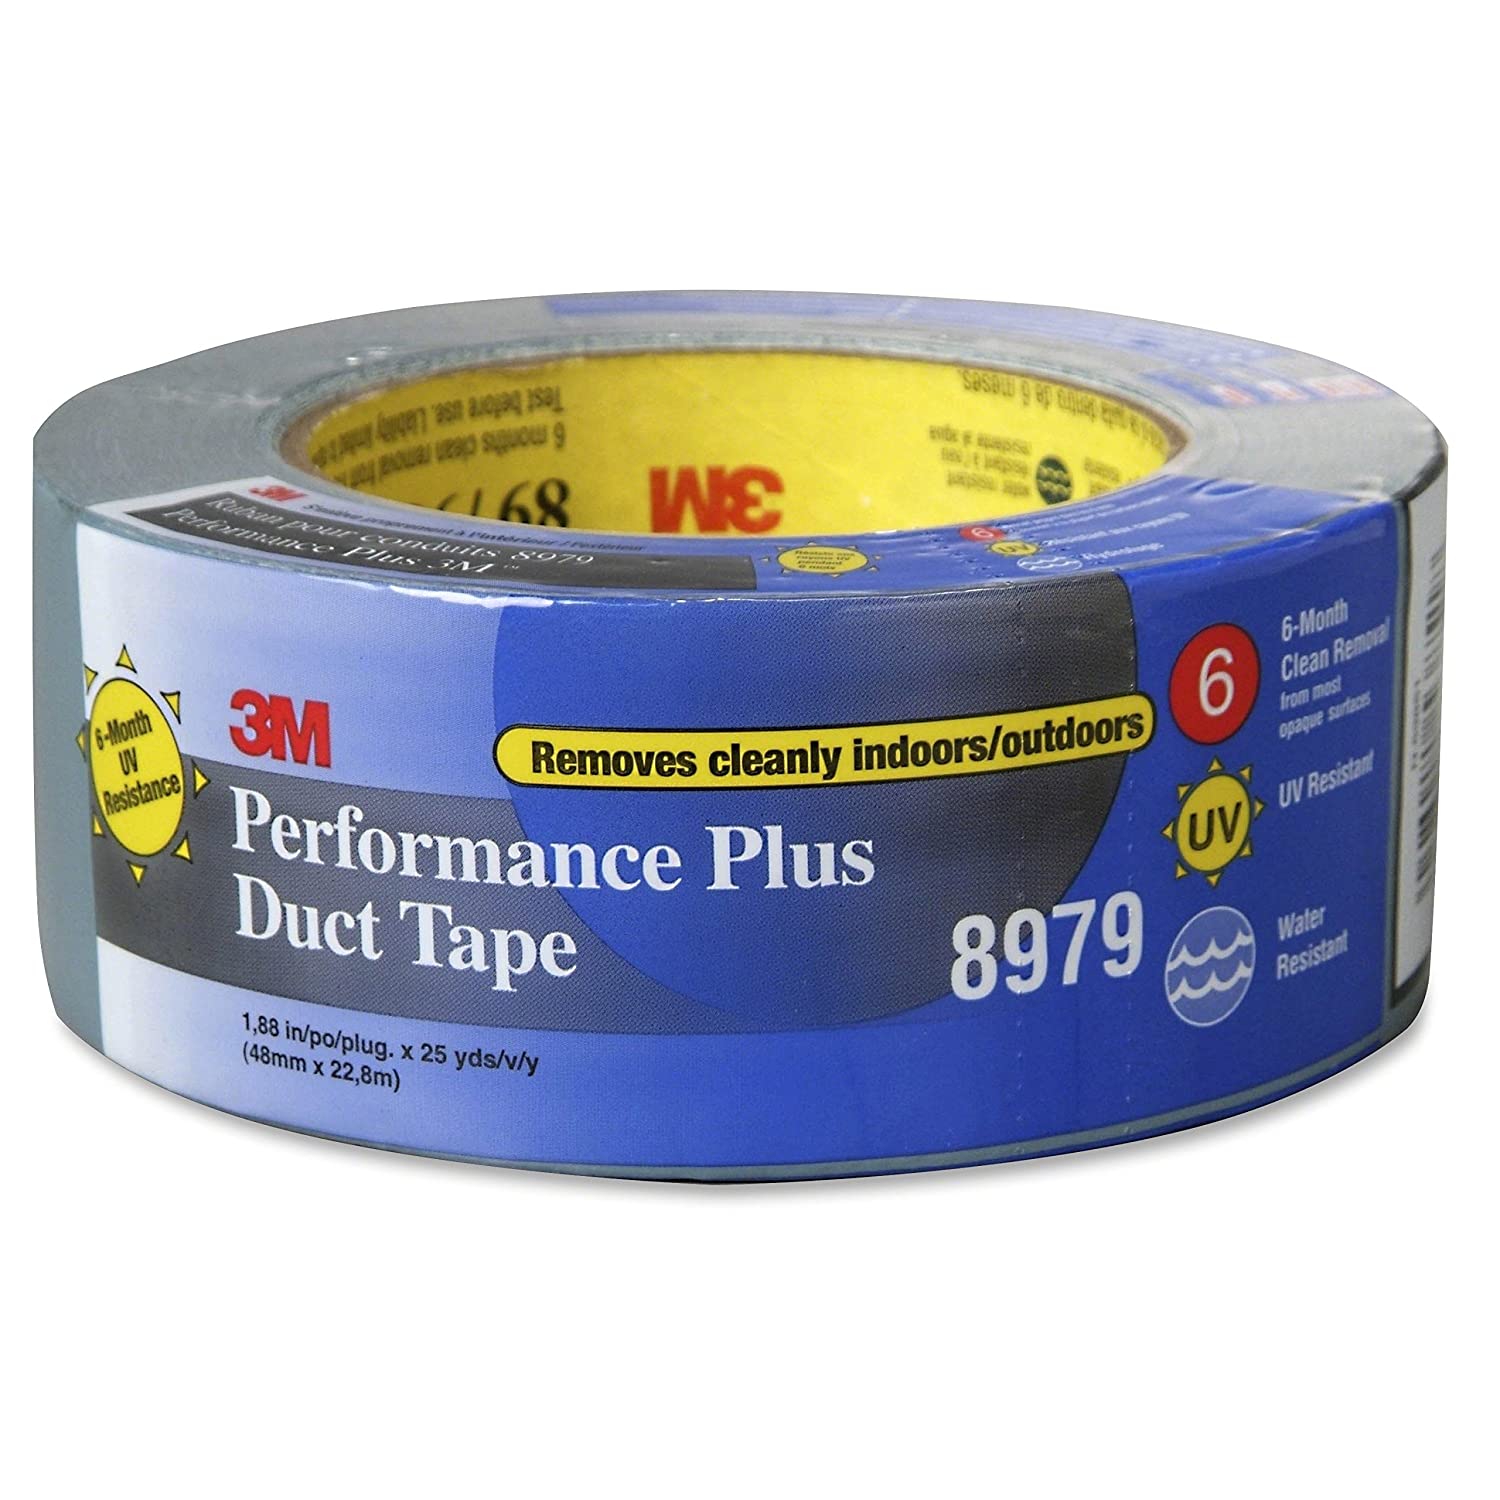 3M Performance Plus Duct Tape (8979)